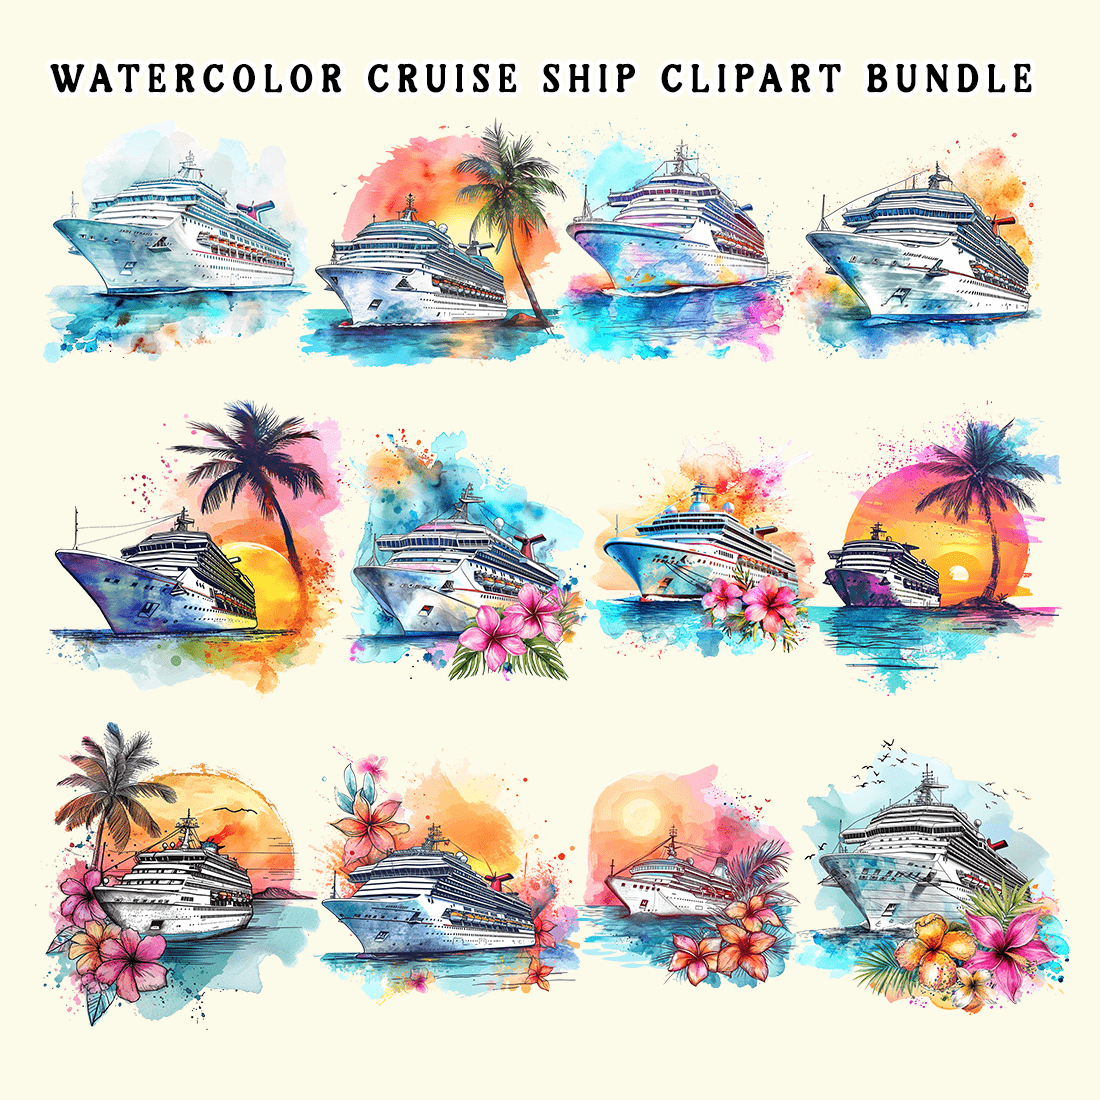 Watercolor Cruise Ship Clipart Bundle preview image.